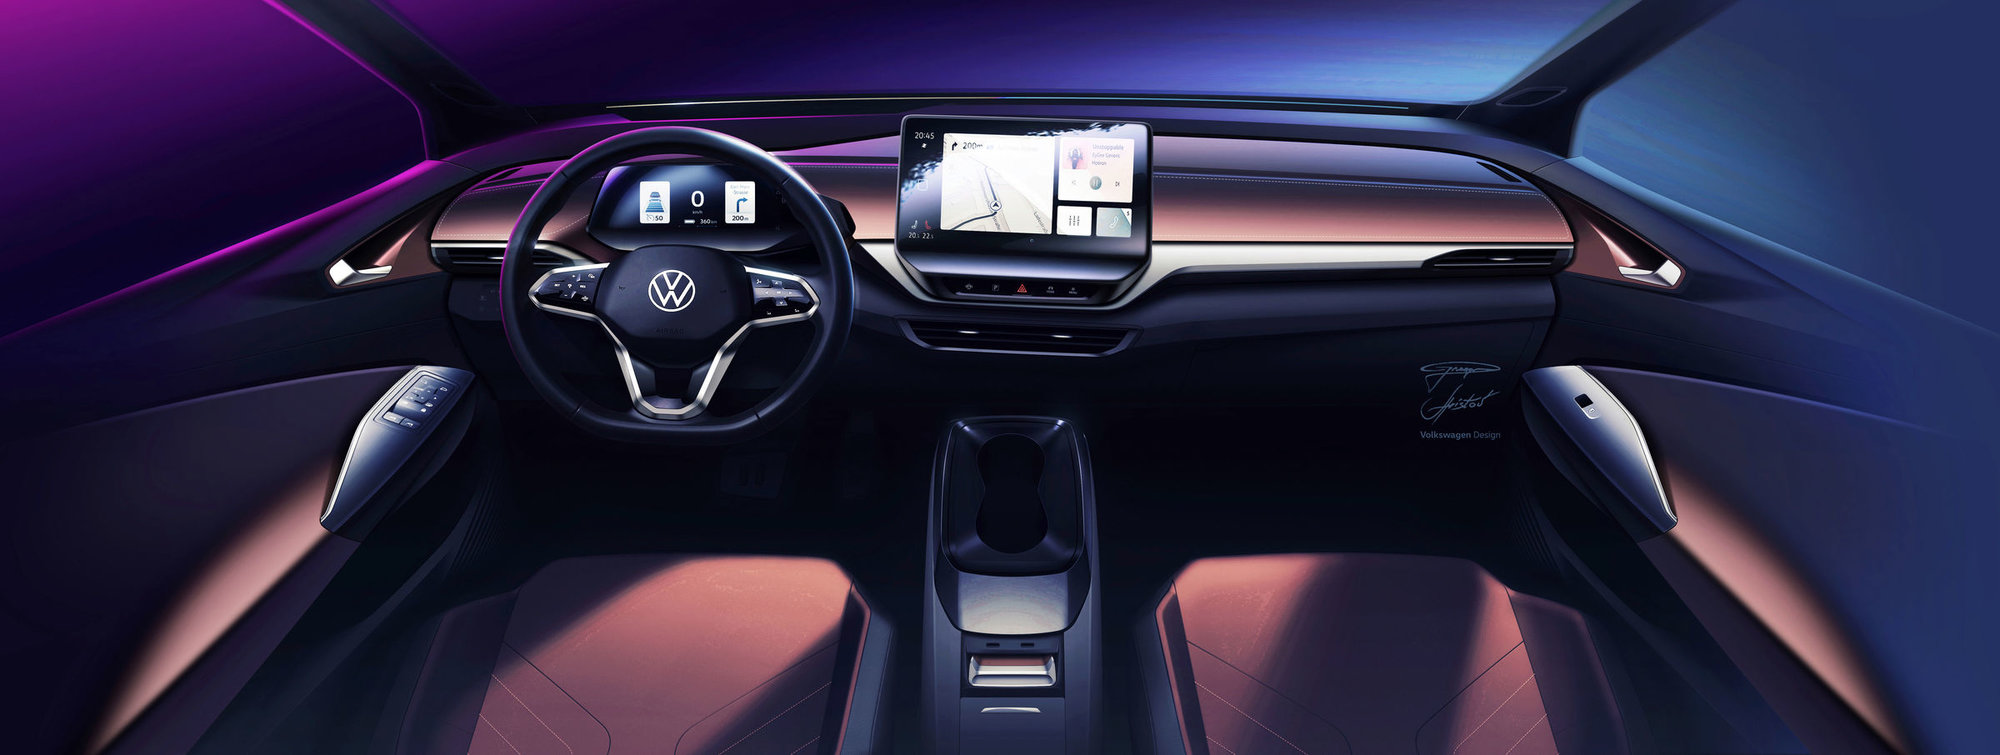 Volkswagen prozradil podrobnosti o interiéru připravovaného SUV ID.4